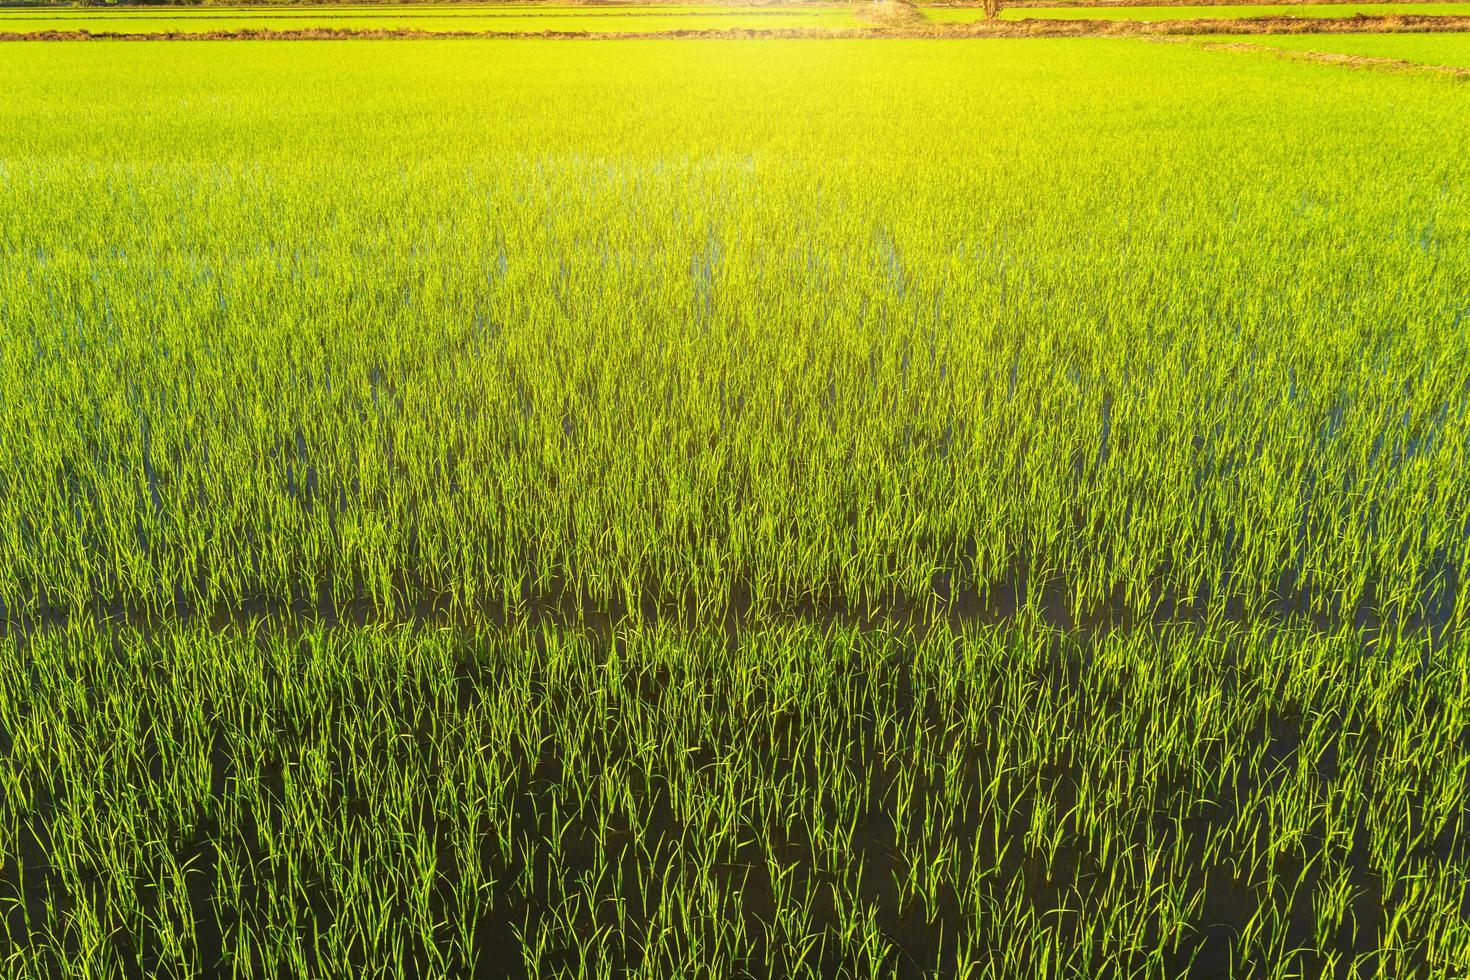 Beautiful green cornfield with sunset sky background. photo